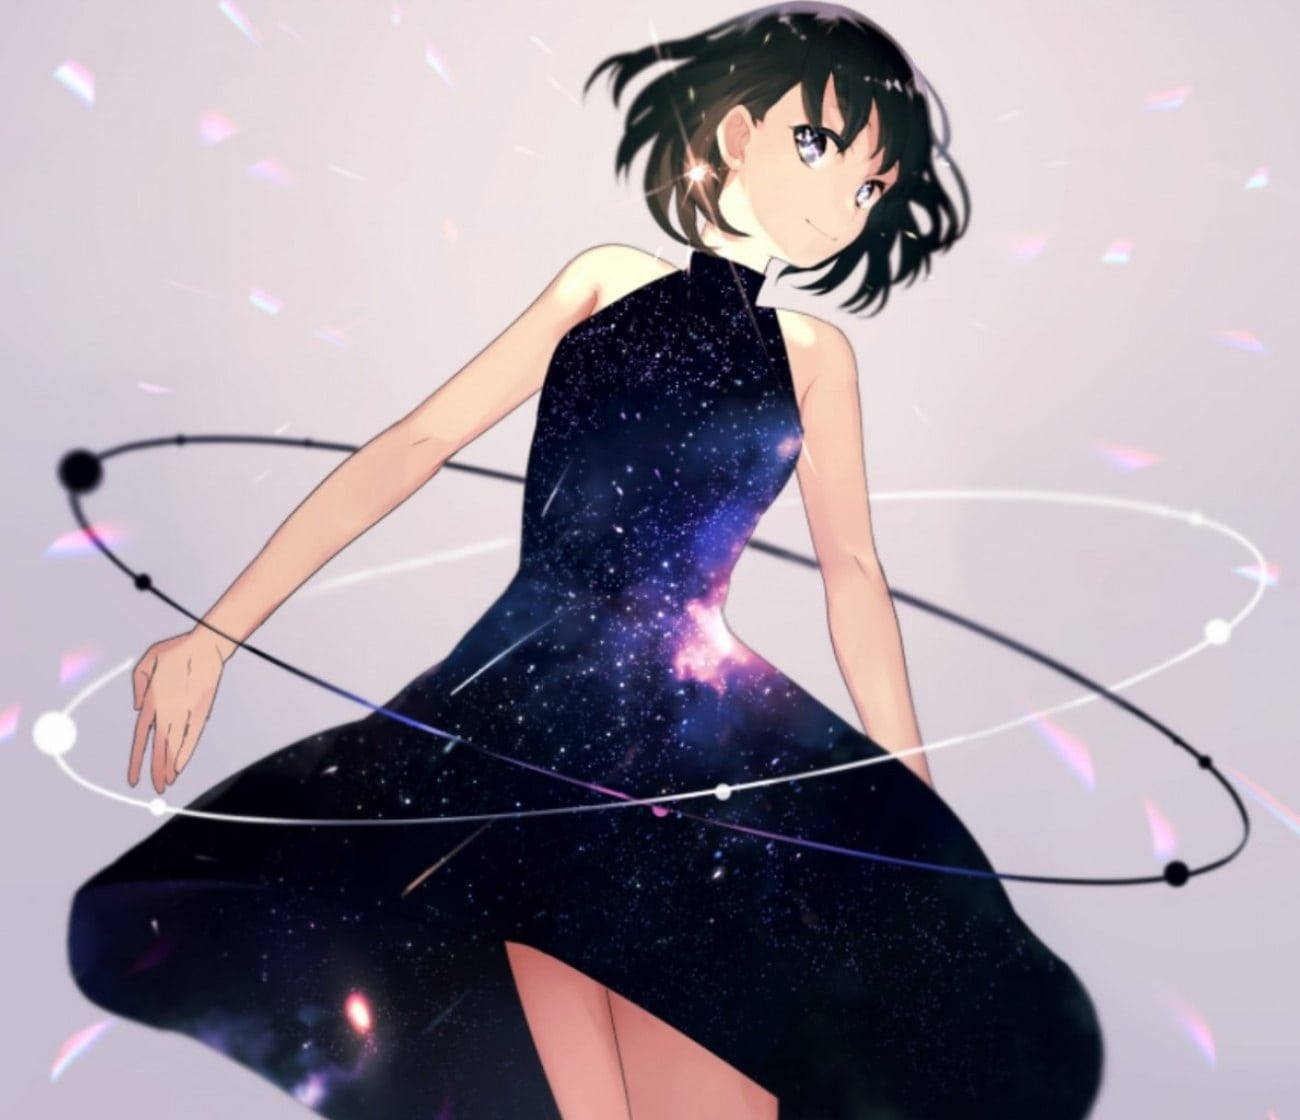 Smuk Galakse Anime Pige Wallpaper